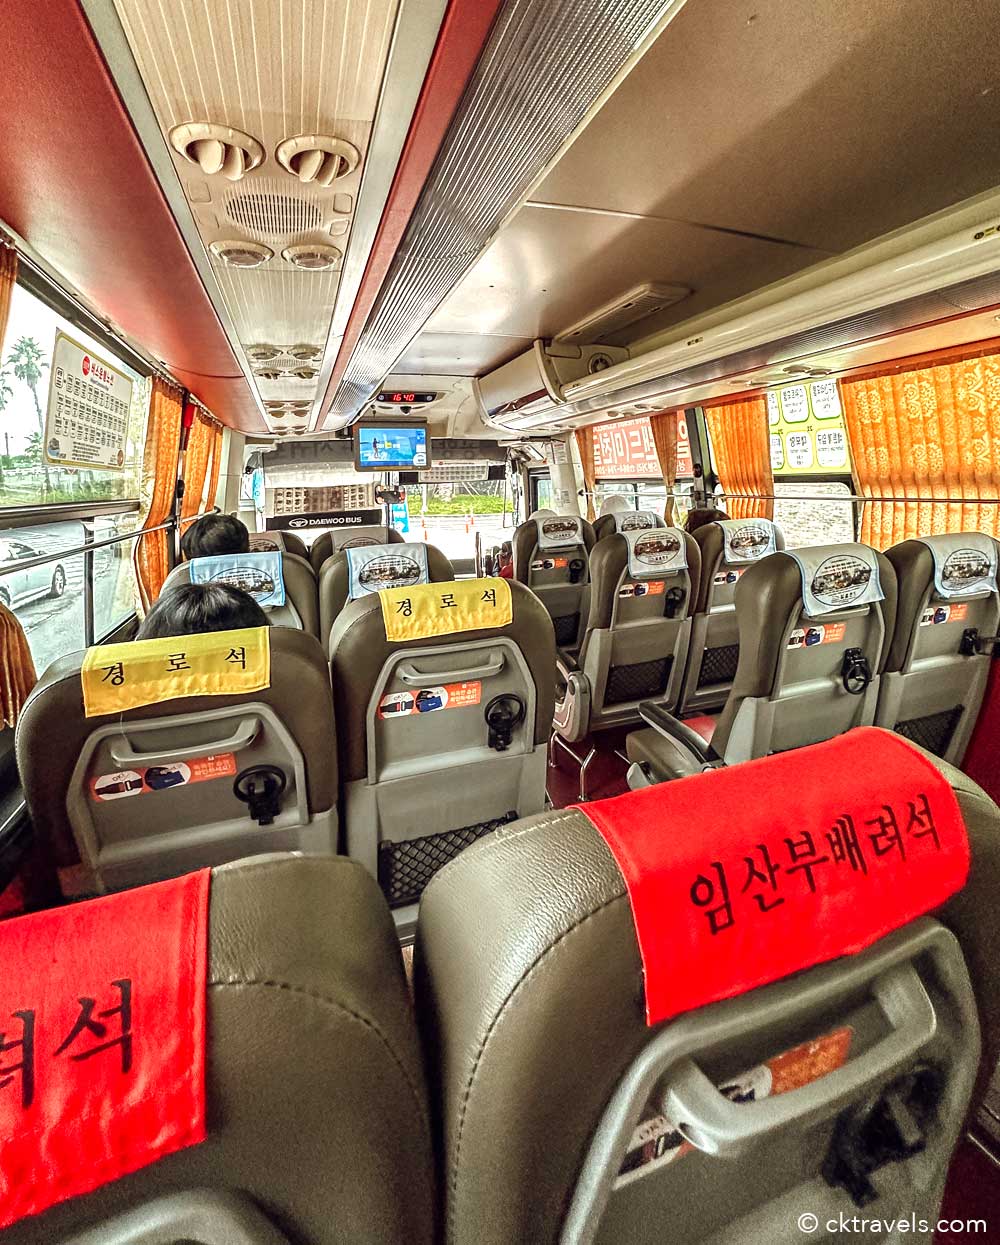 Jeju Airport Limousine Bus 600 Guide